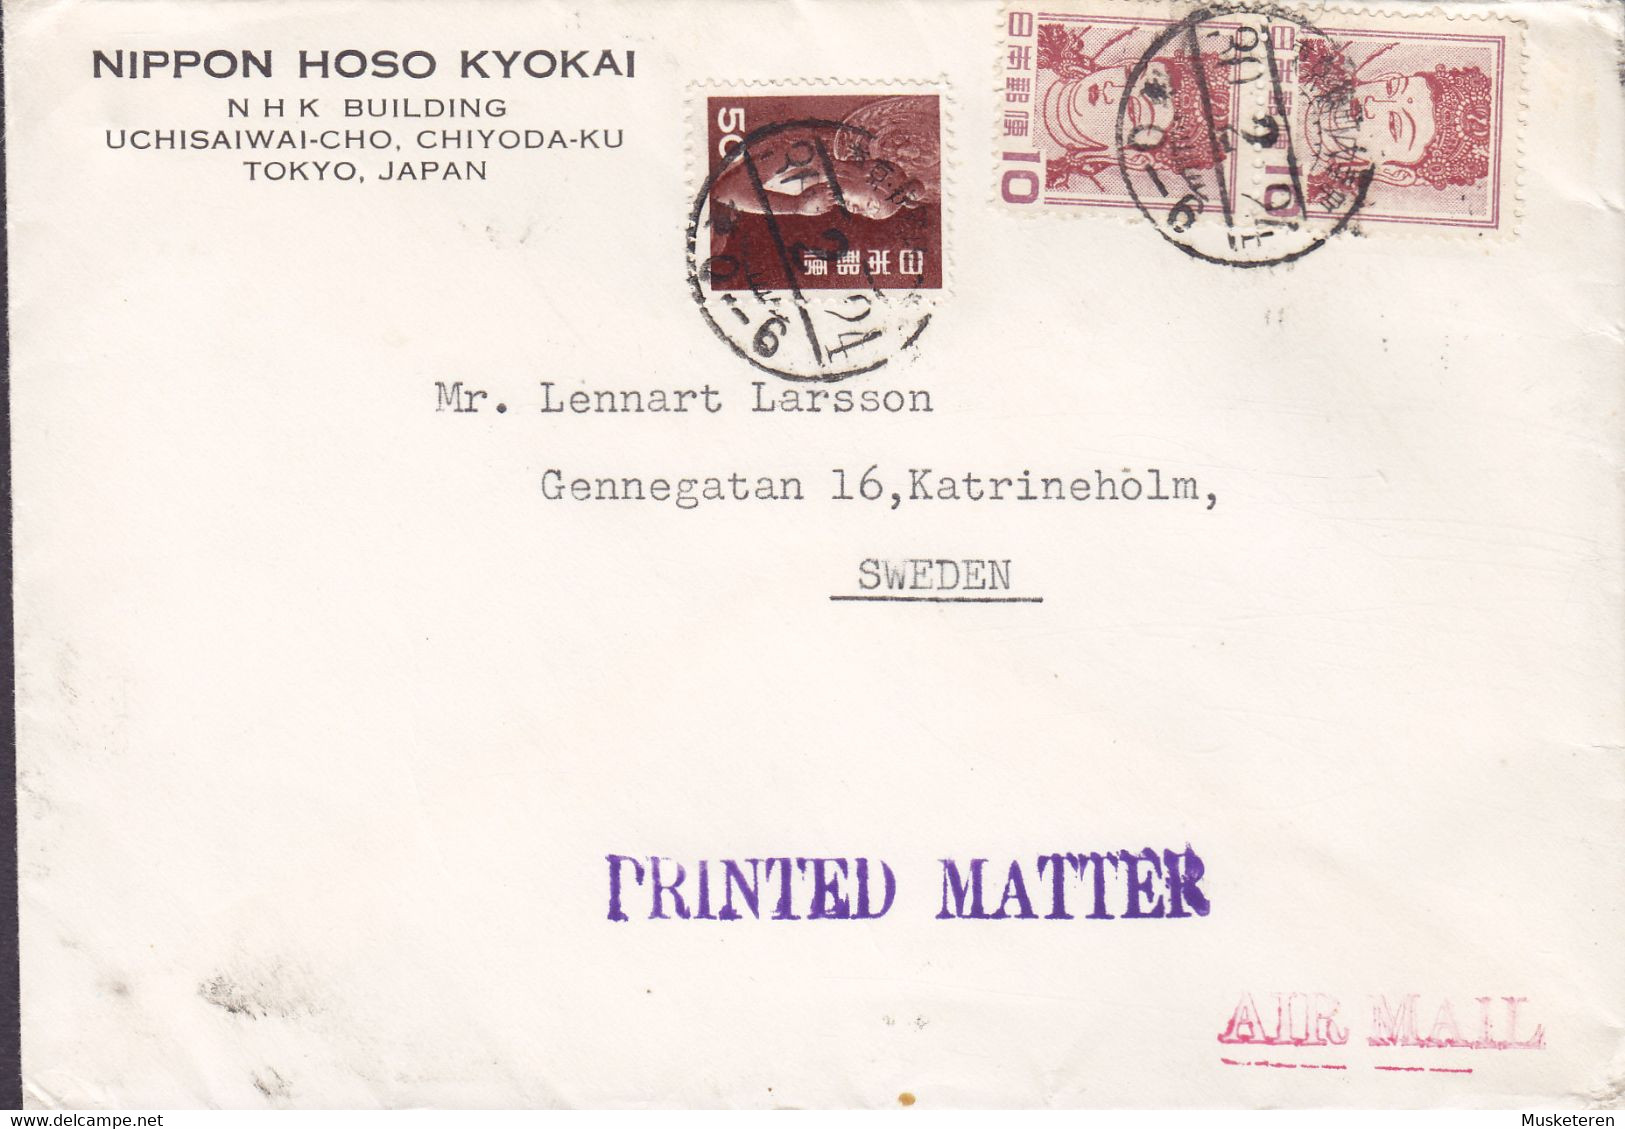 NIPPON HOSO KYOKAI Japan Broadcasting Corporastion CHIYODA-KU Tokyo 1955 Cover Brief KATRINEHOLM Sweden Printed Matter - Briefe U. Dokumente